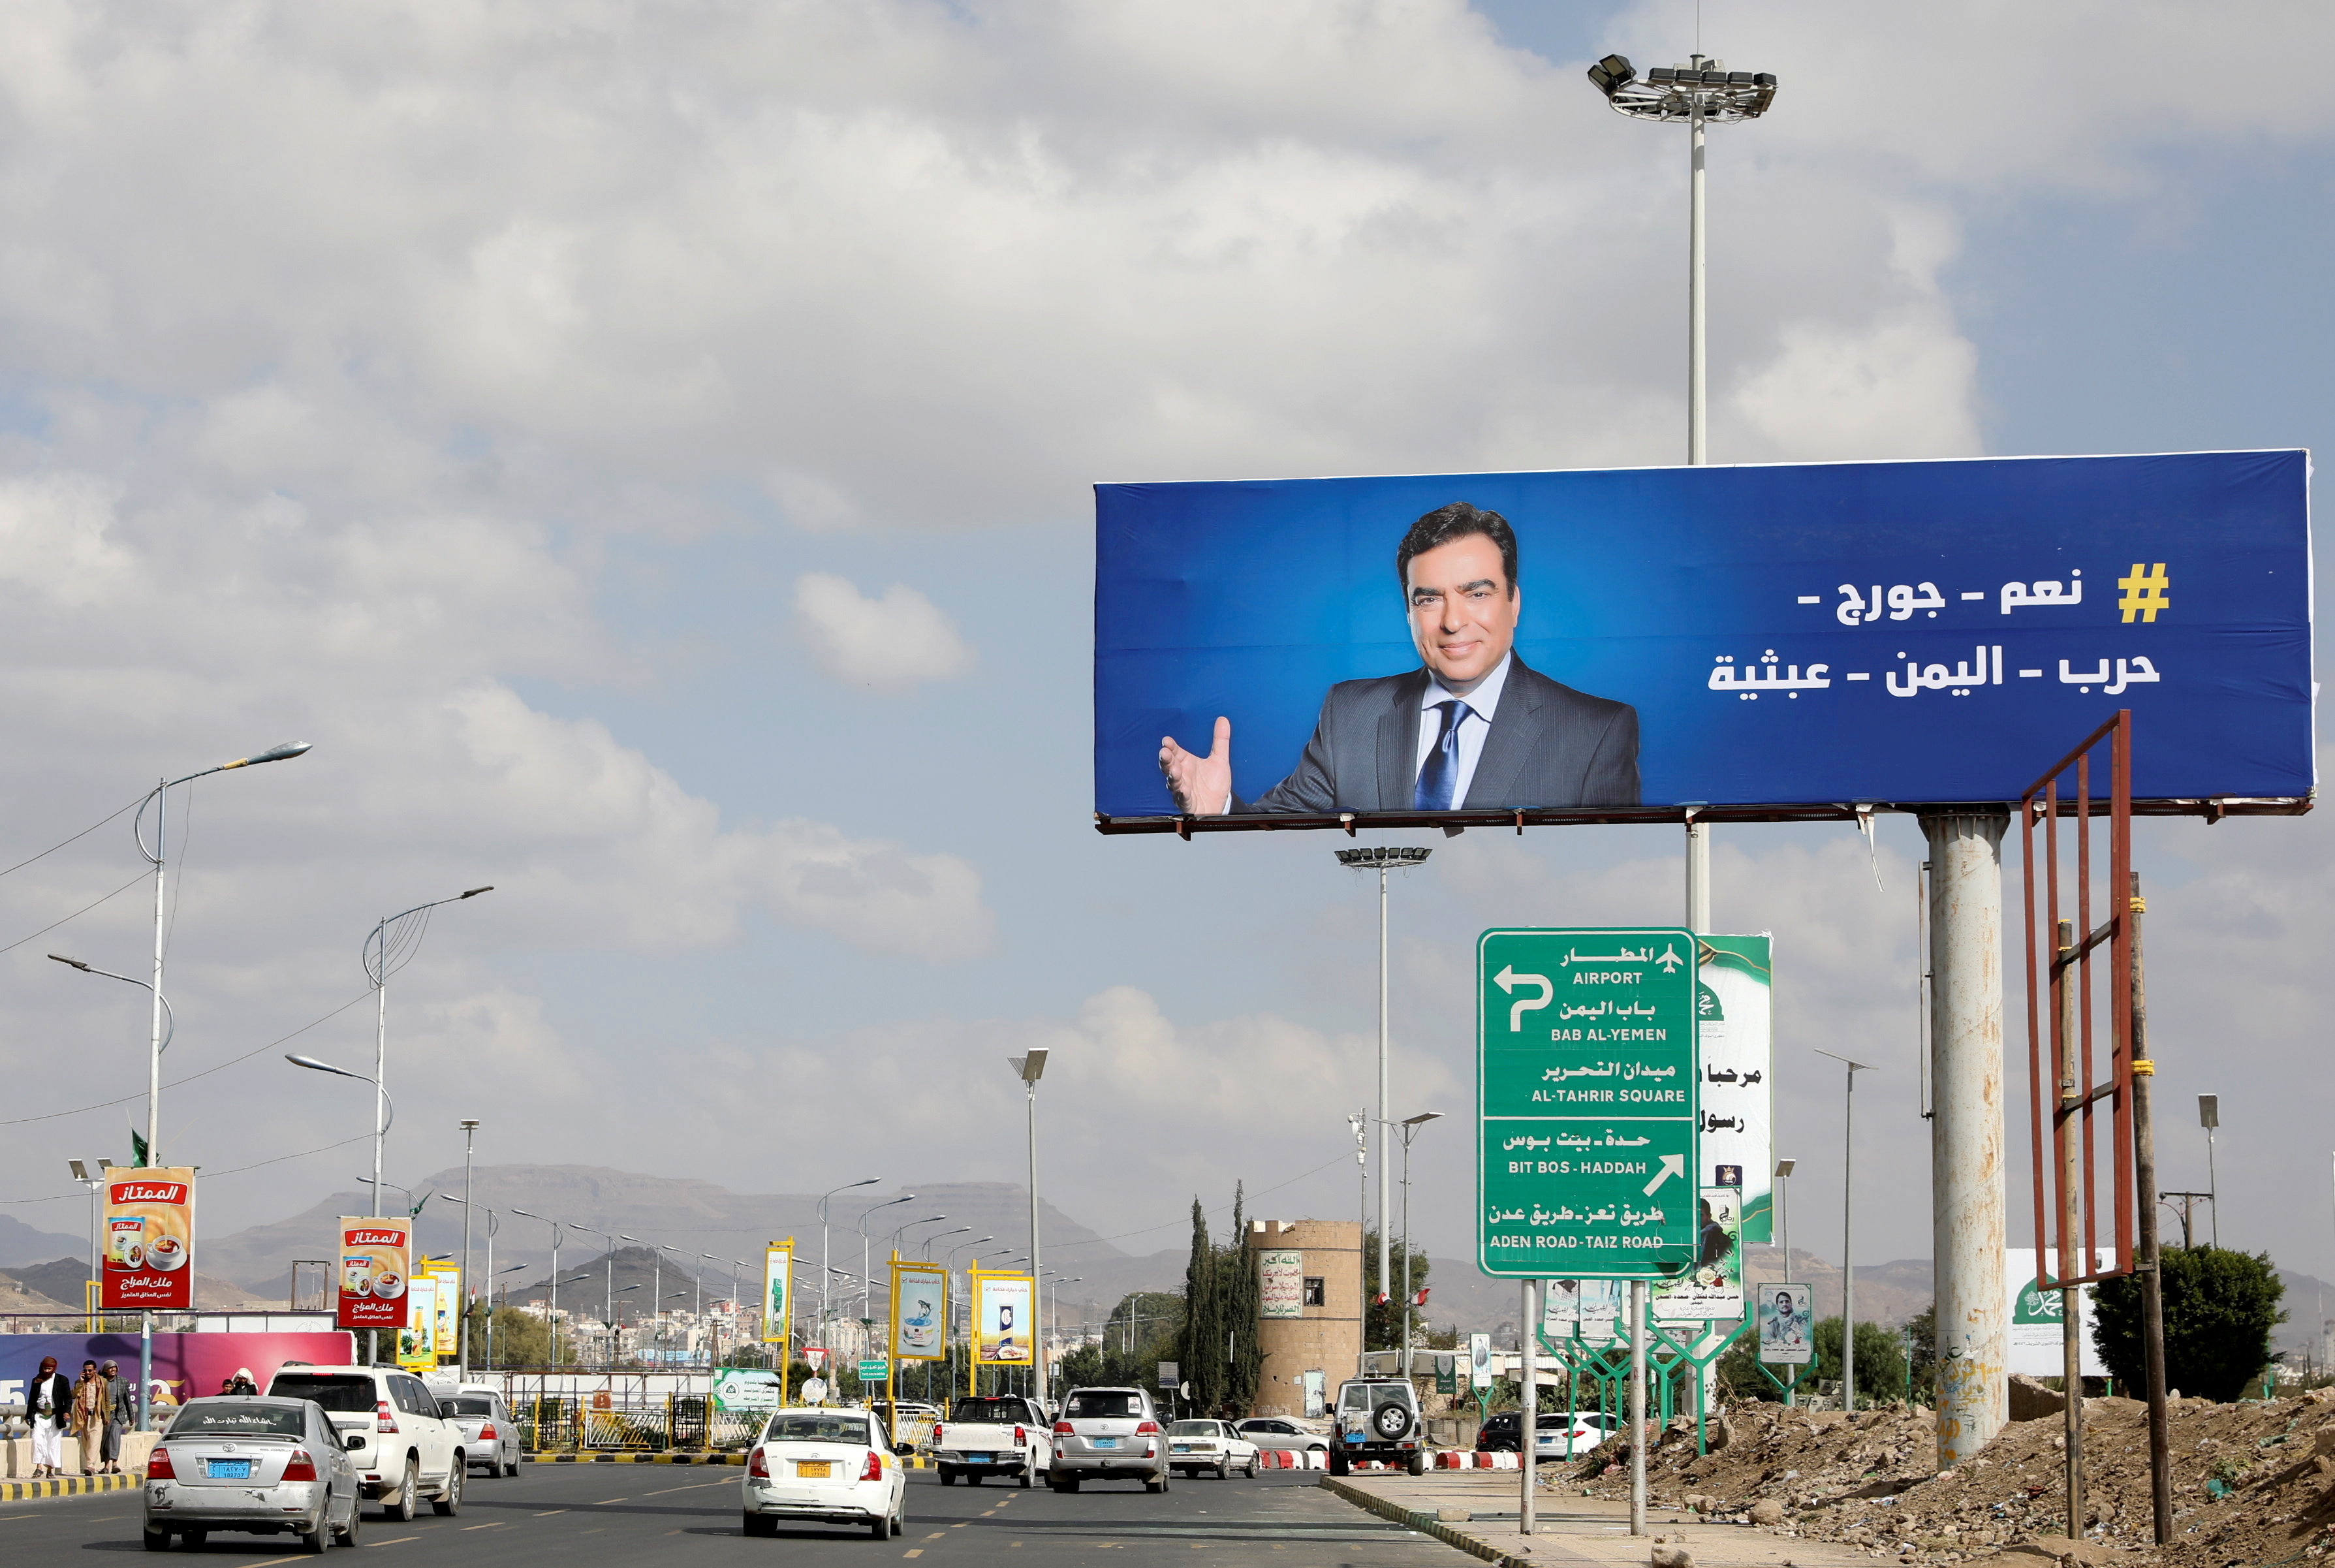 Poster of Lebanese Information Minister George Kordahi is seen on billboard in Sanaa, Yemen